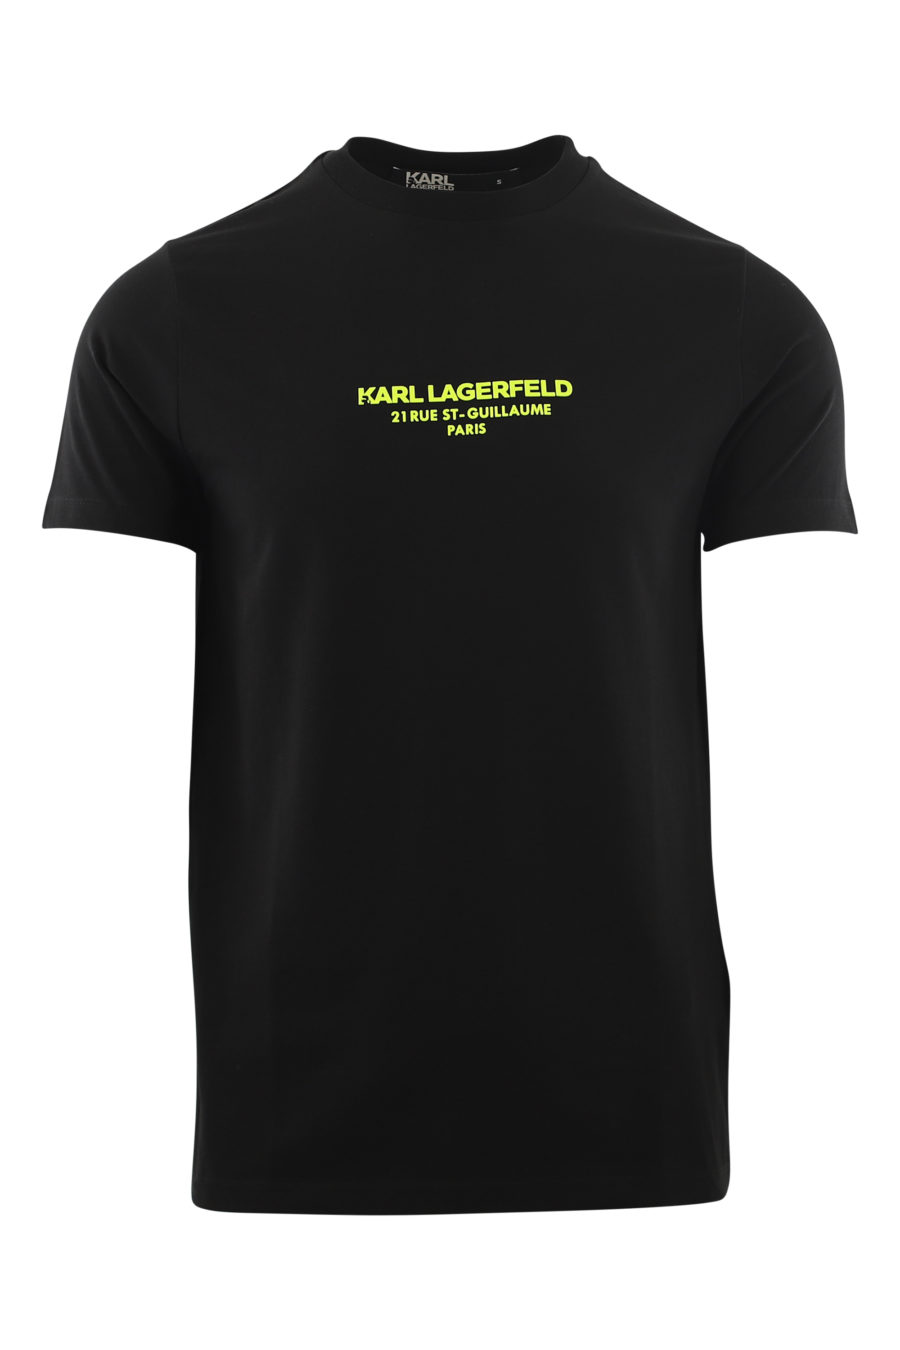 Camiseta negra con logo verde en relieve - IMG 6546